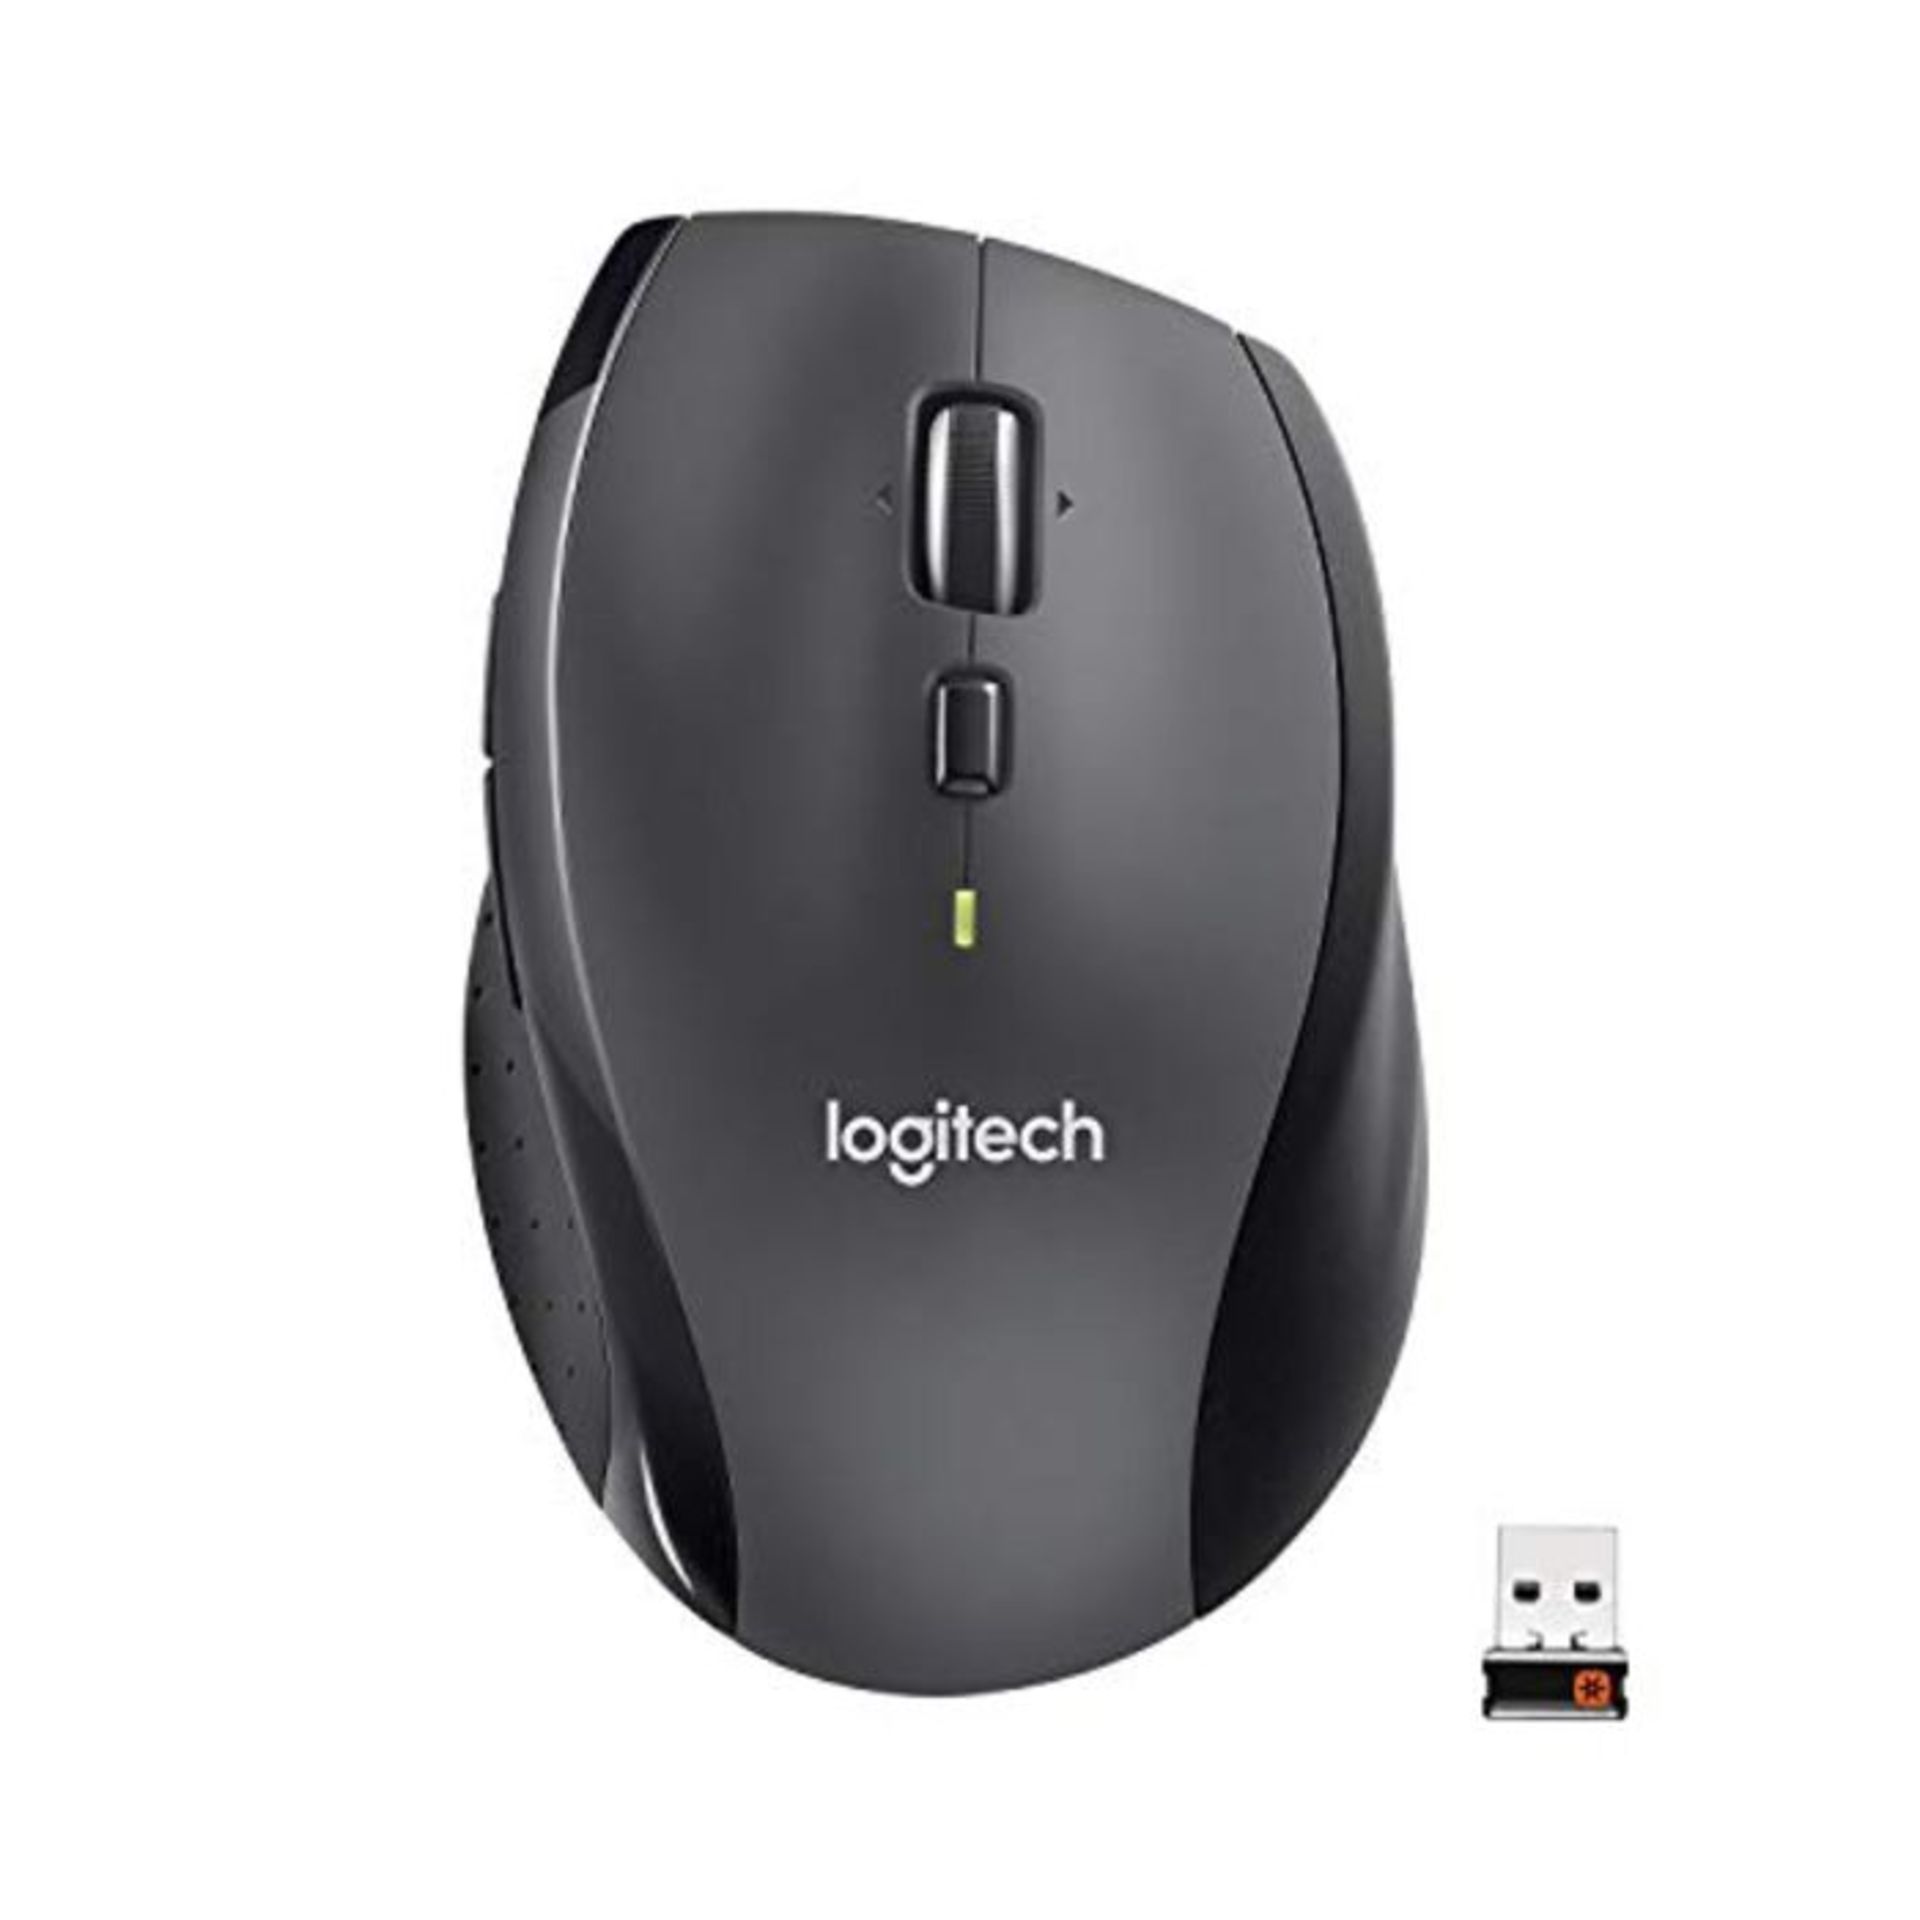 Logitech M705 Marathon Wireless Mouse, 2.4 GHz USB Unifying Receiver, 1000 DPI, 5-Prog